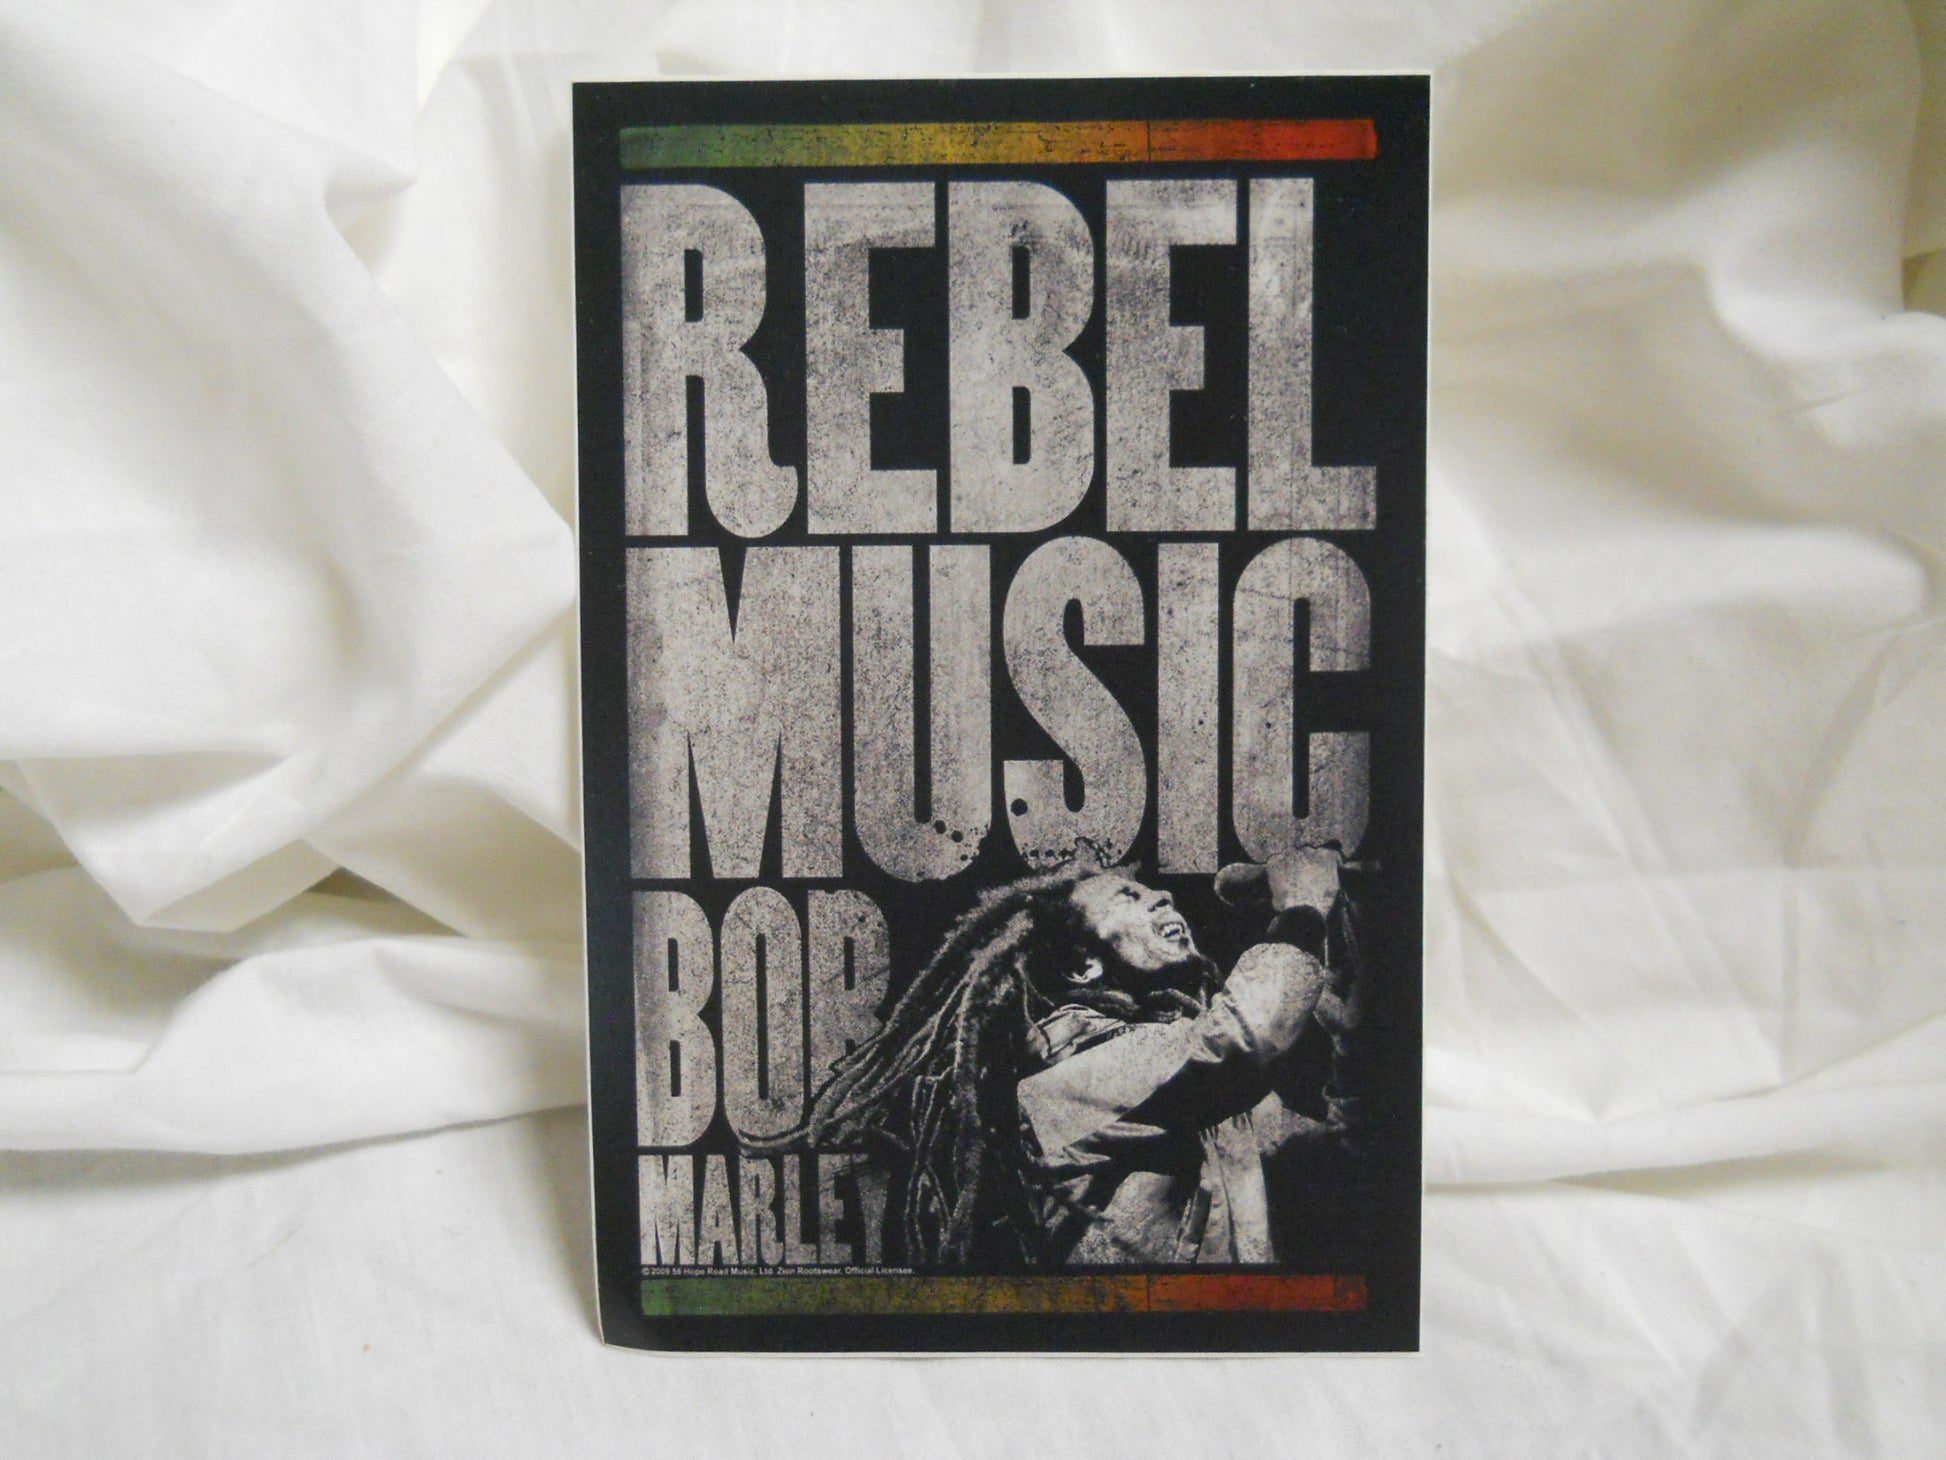 Bob Marley Rebel Music Sticker - HalfMoonMusic